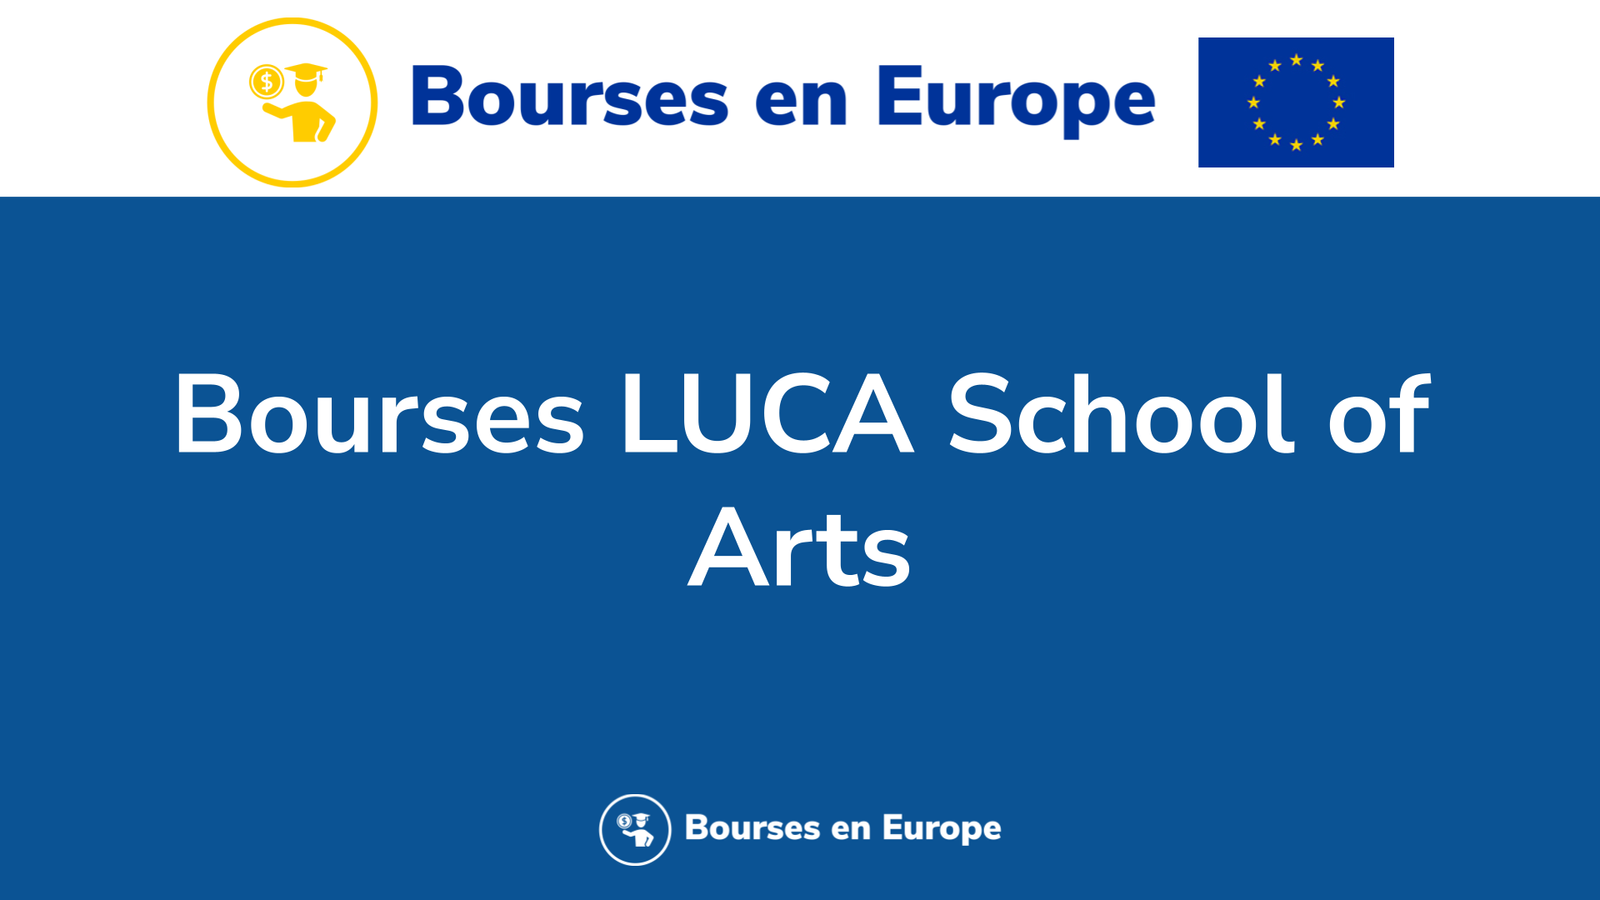 Bourses LUCA School of Arts